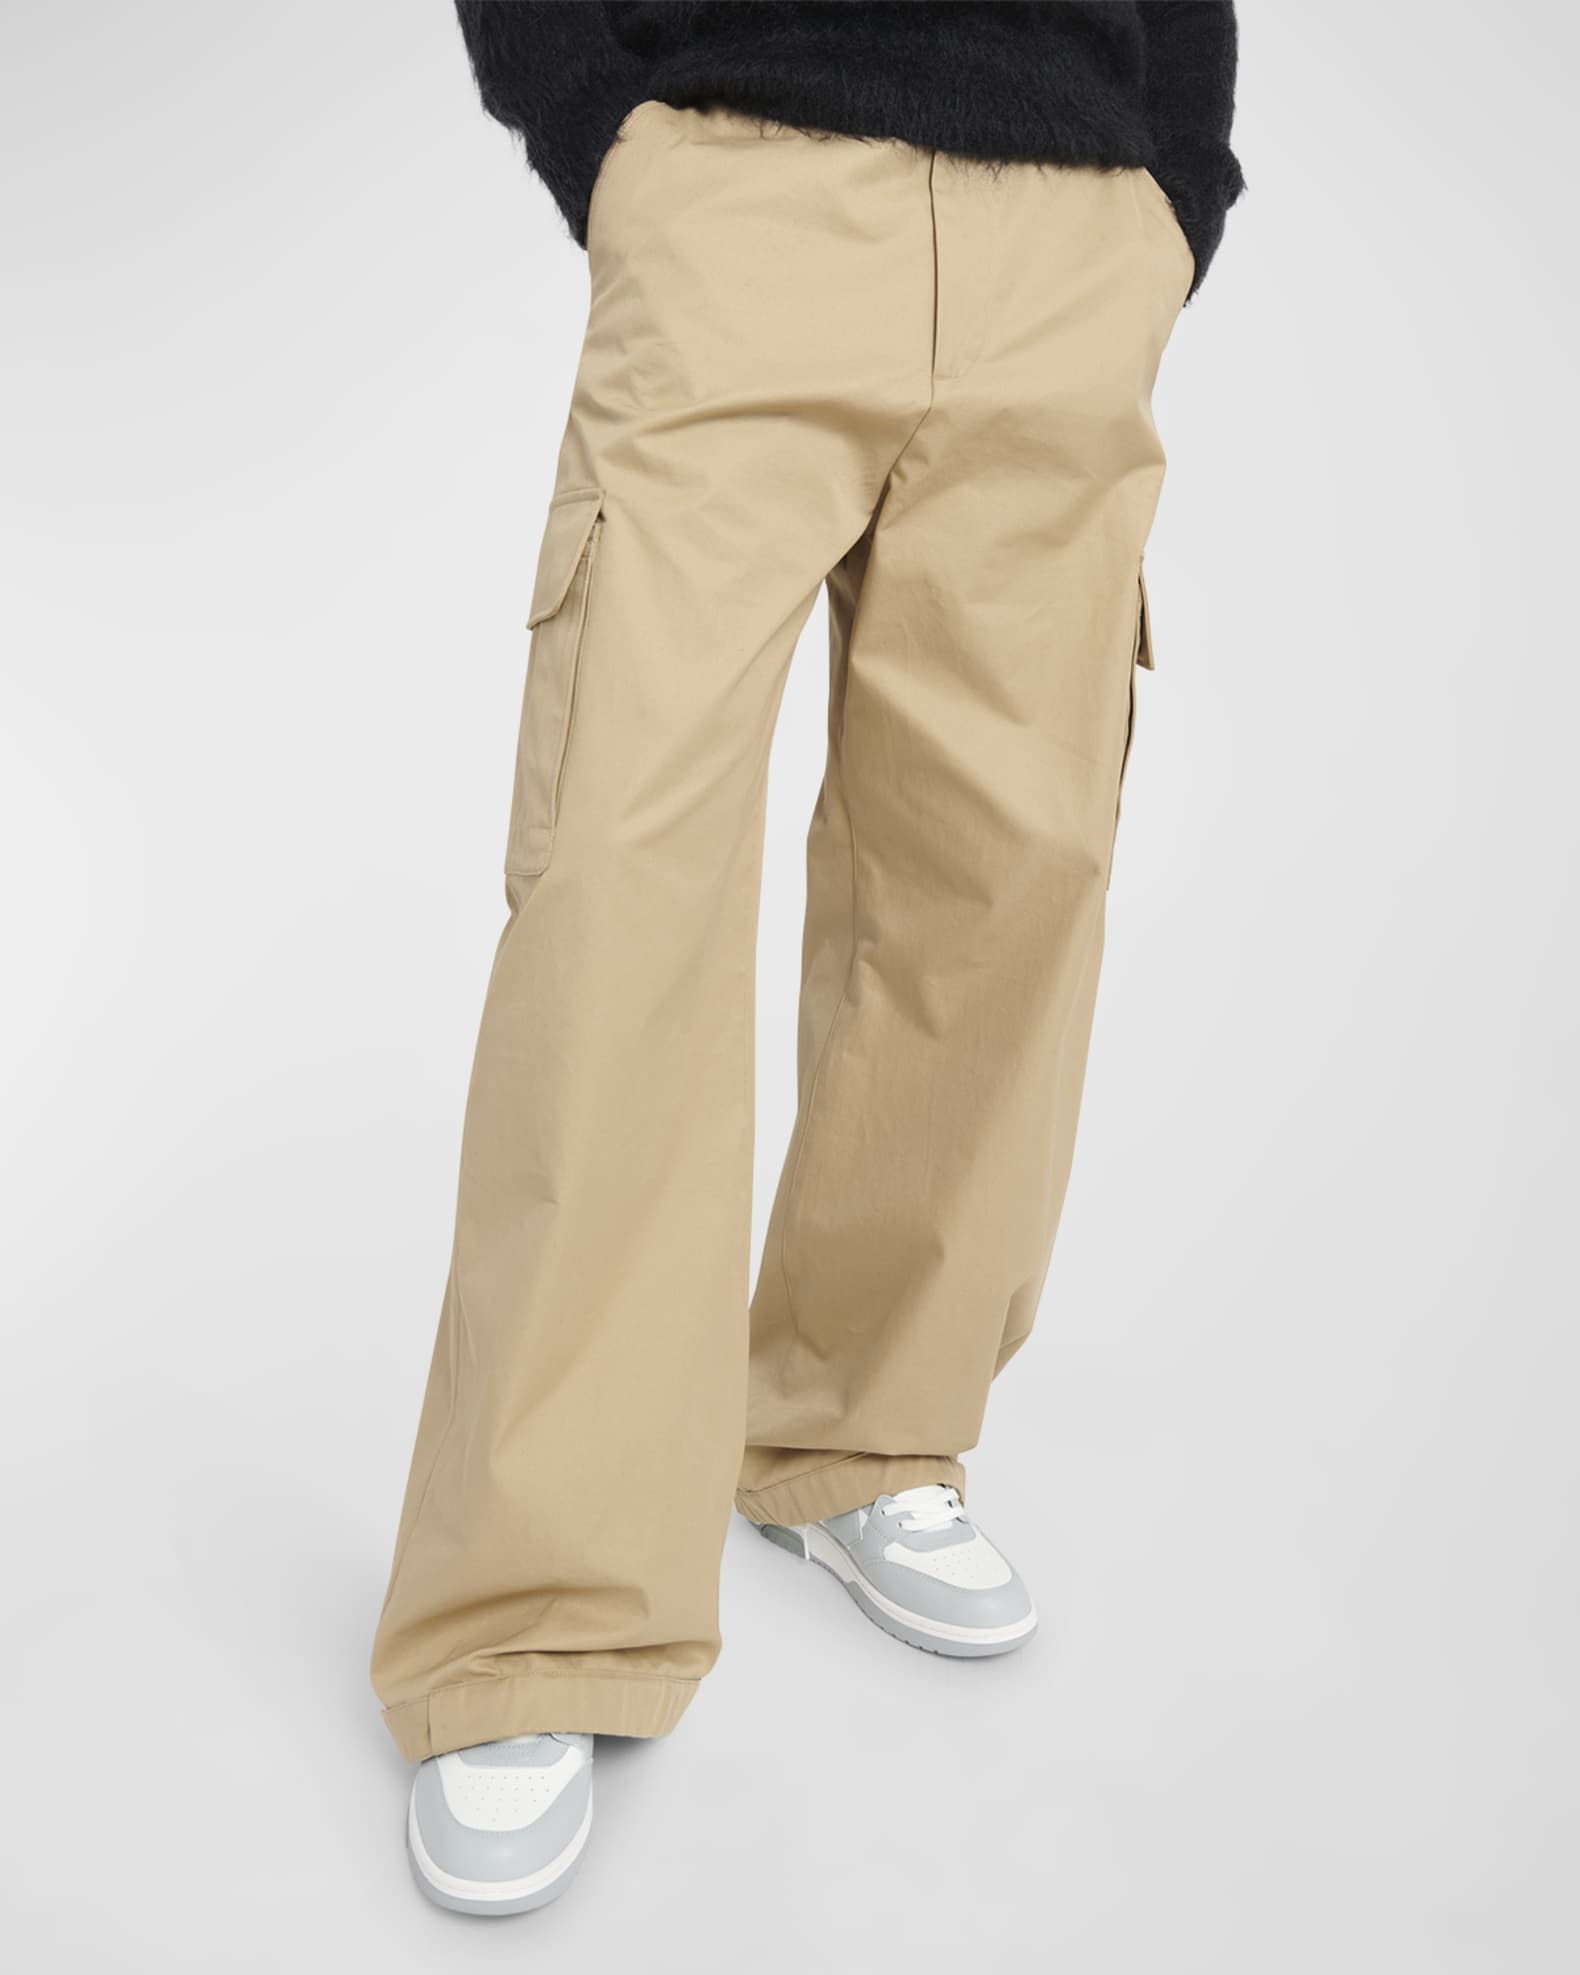 Off-White c/o Virgil Abloh Pants In Polyester in Brown for Men